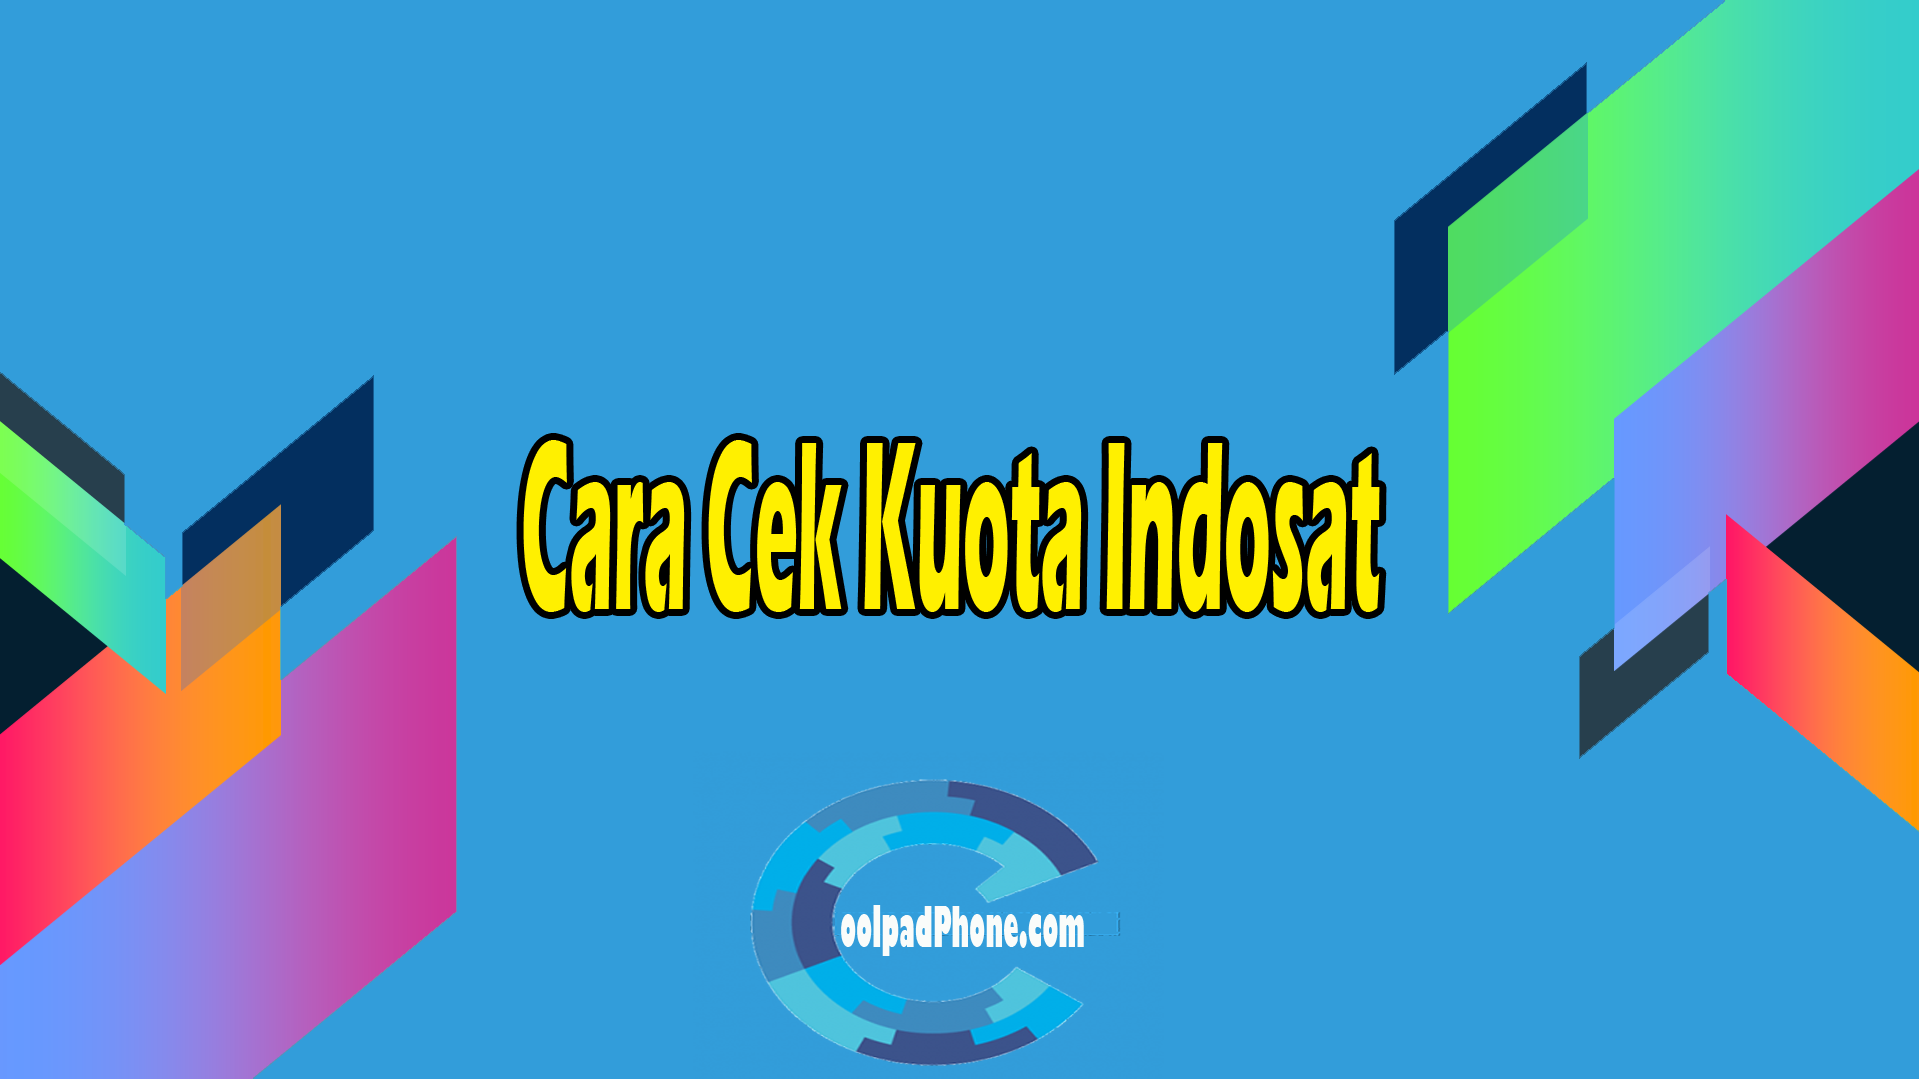 Kontak Indosat Customer Service